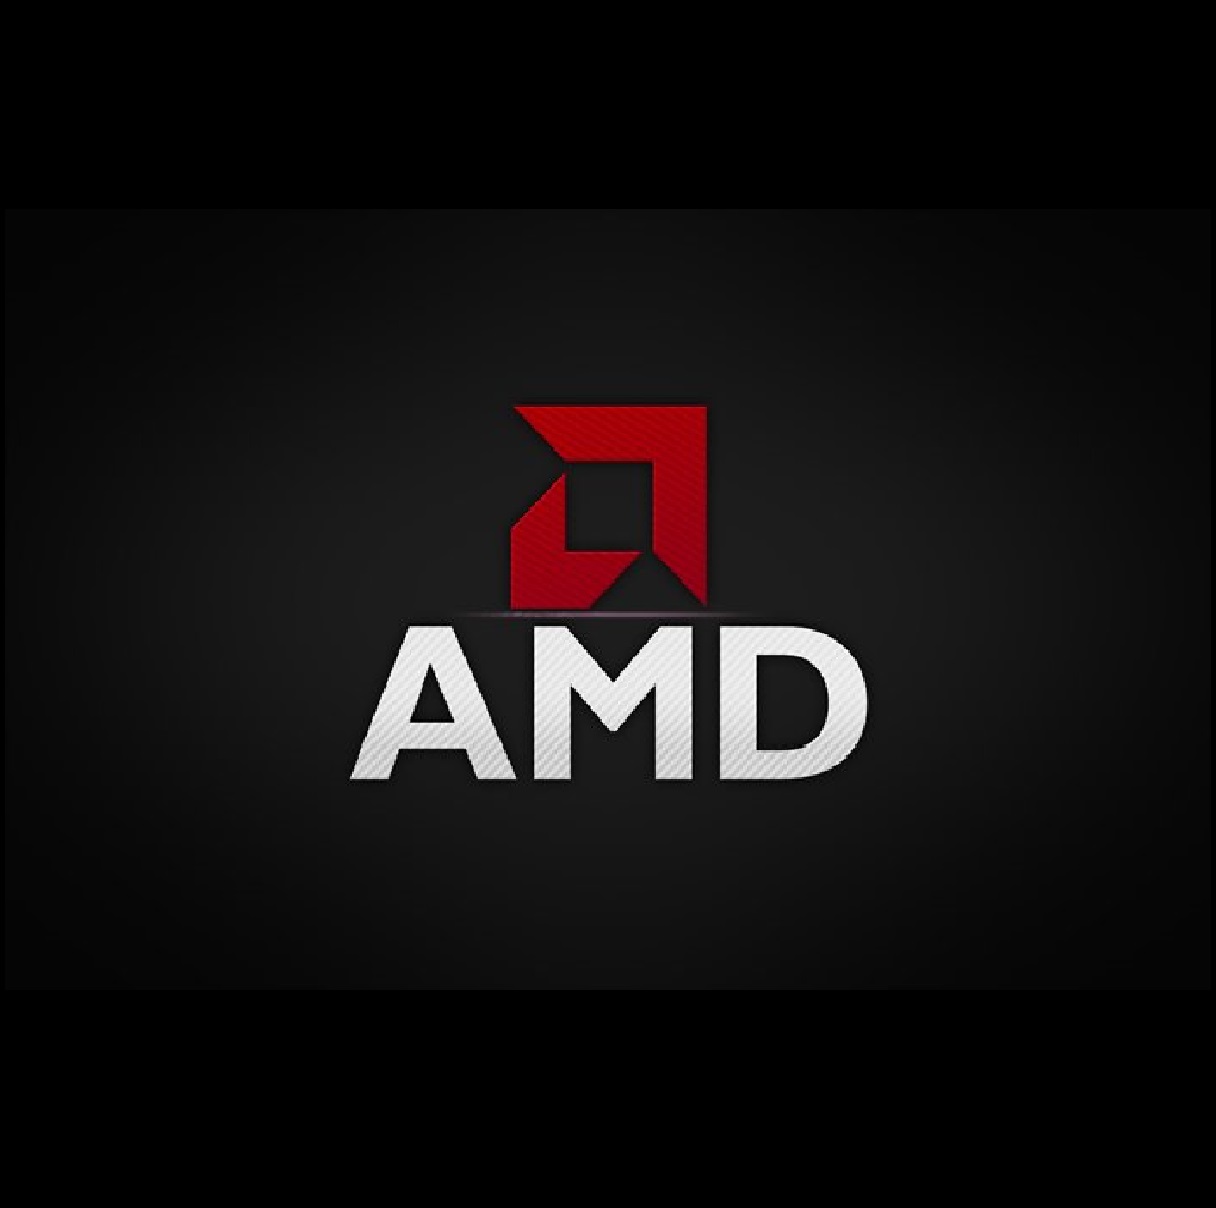 AMD holding